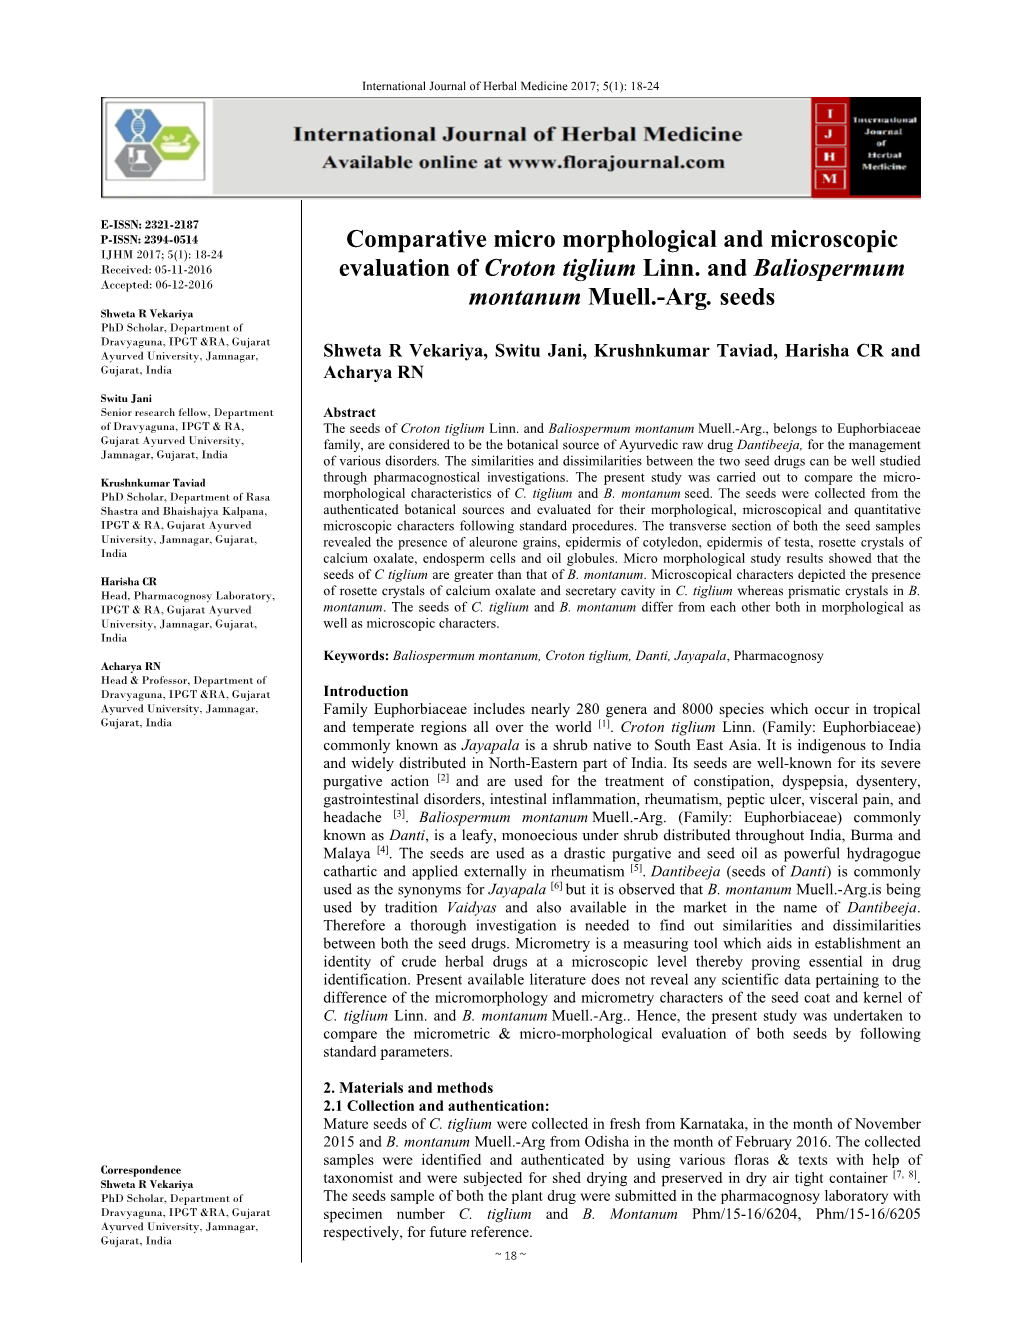 Comparative Micro Morphological and Microscopic Evaluation of Croton